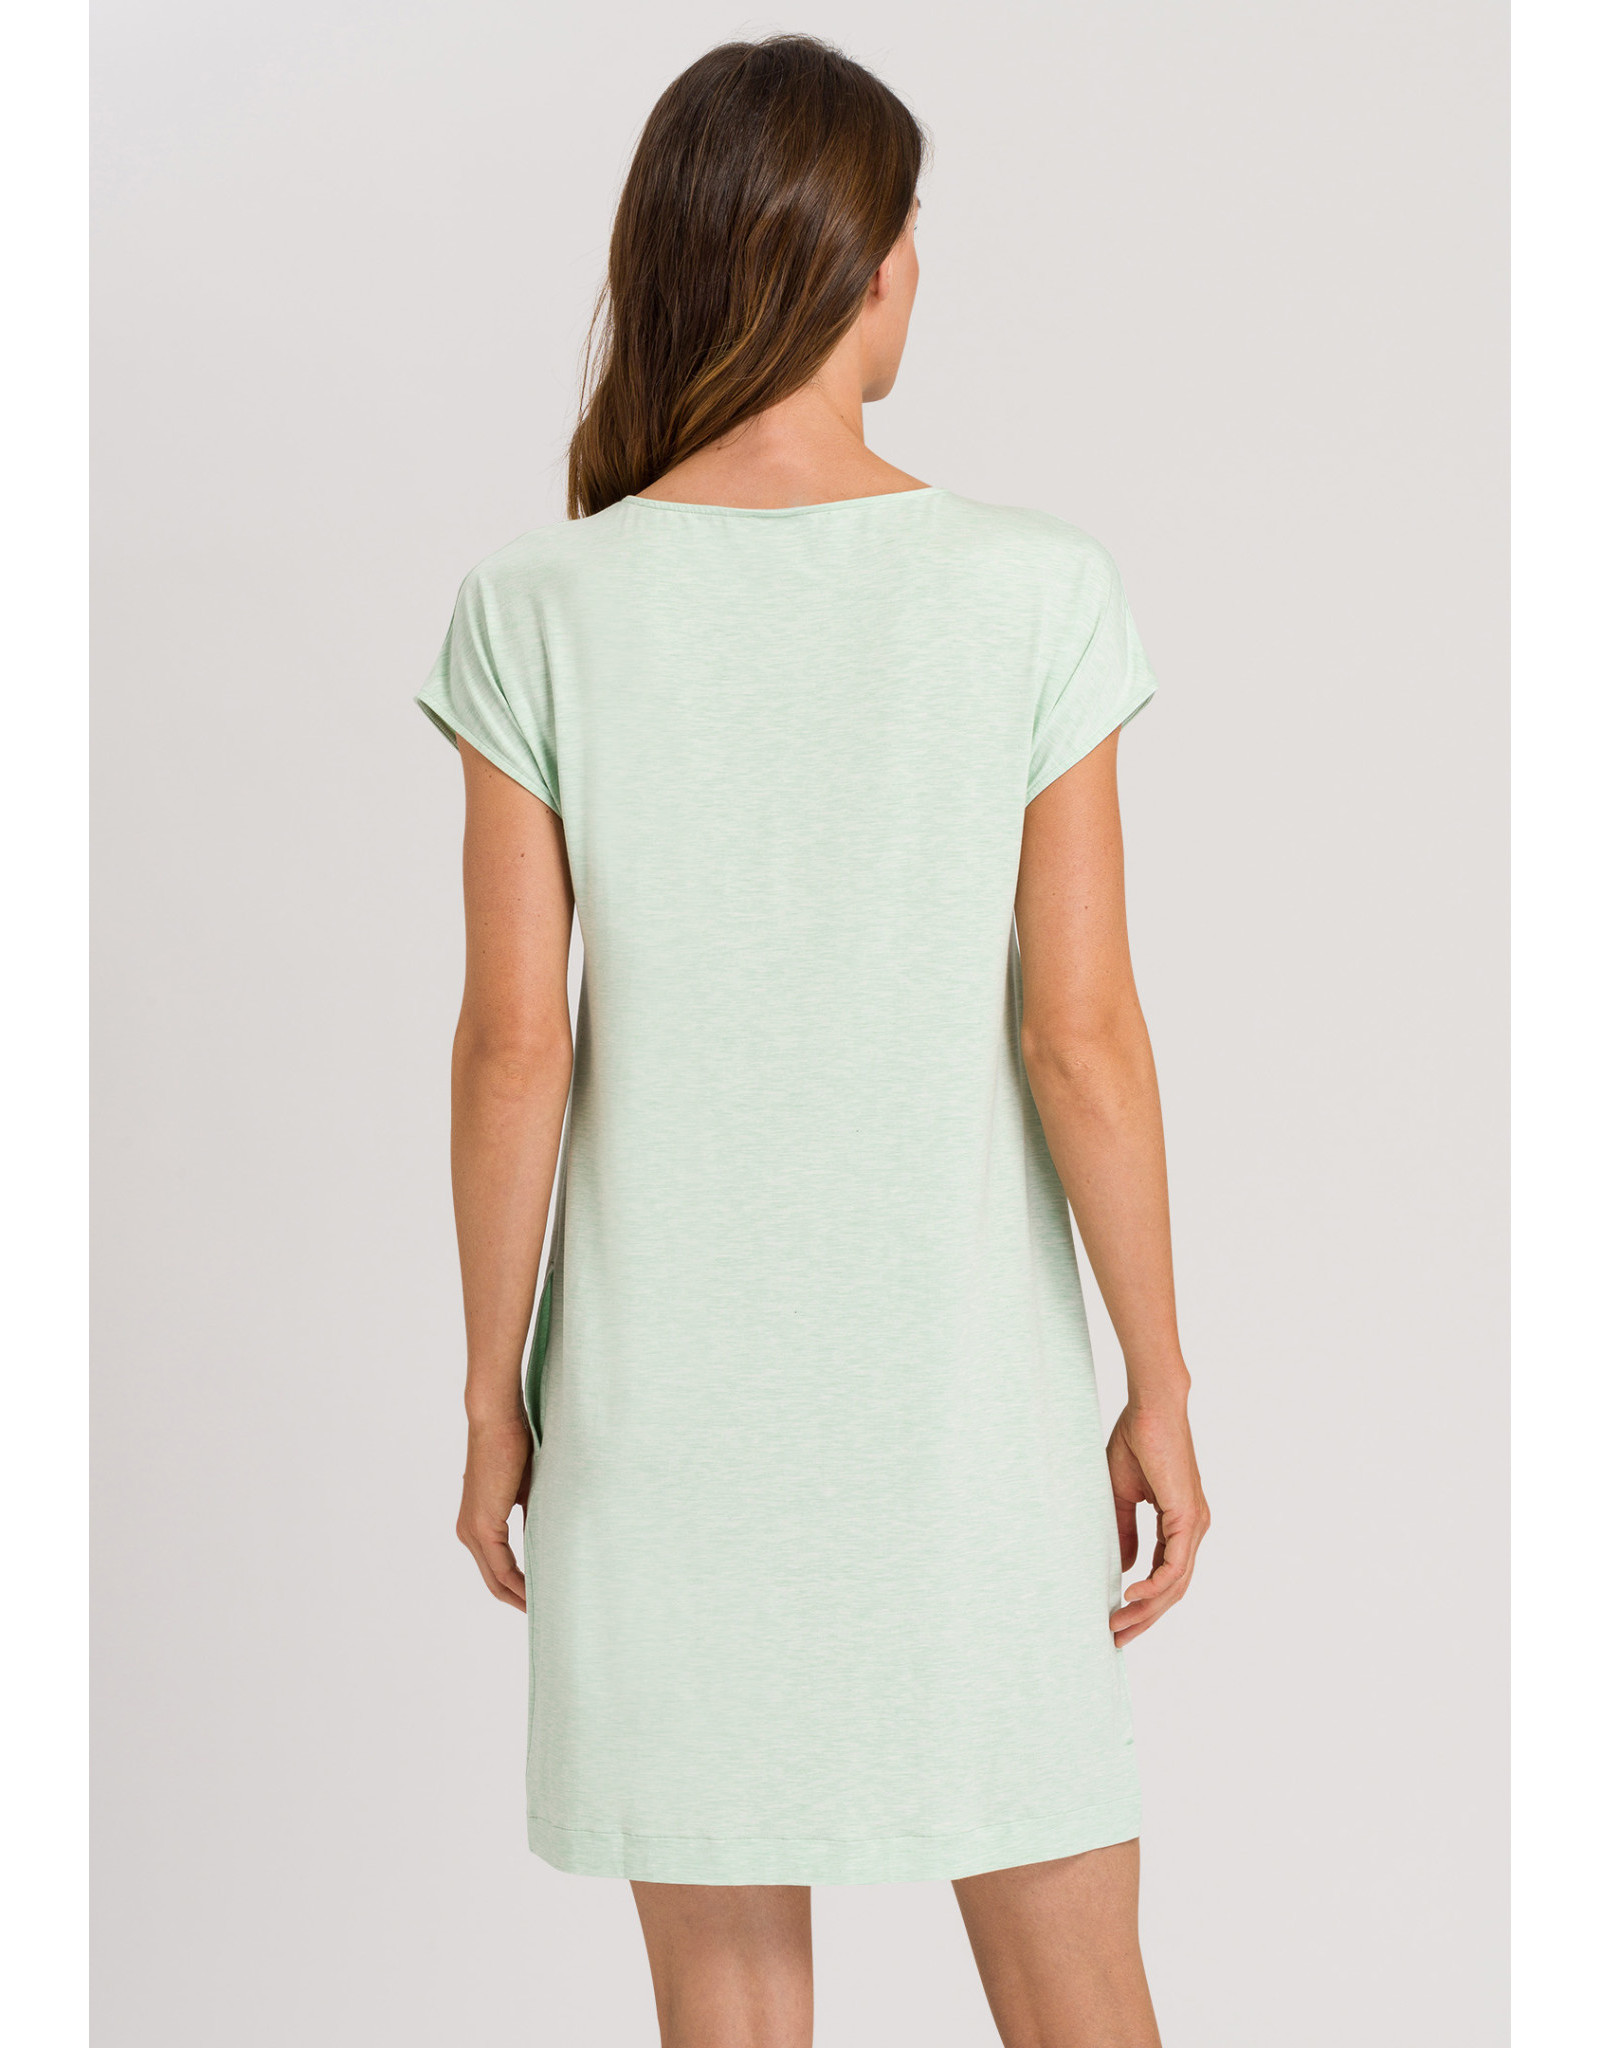 Hanro Natural Elegance Short Cap Sleeve Nightgown